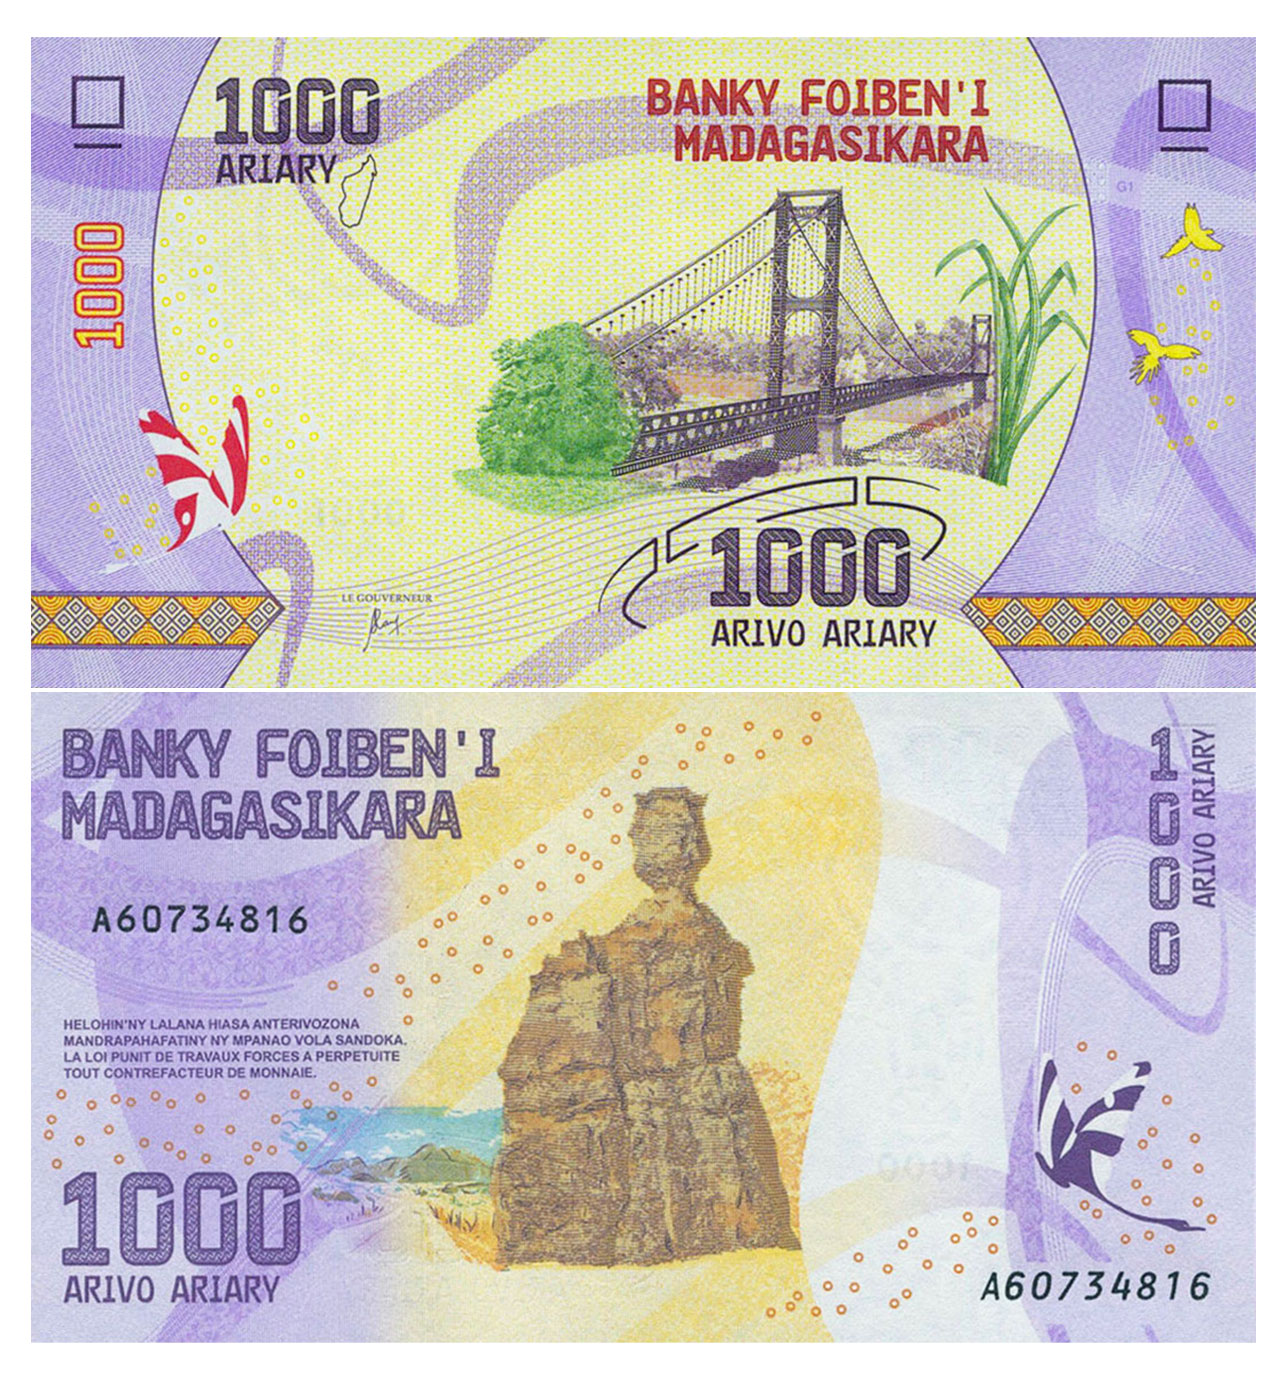 Madagaskar 2017 | Banknoten-Set UNC 100, 200, 500, 1000 Ariary